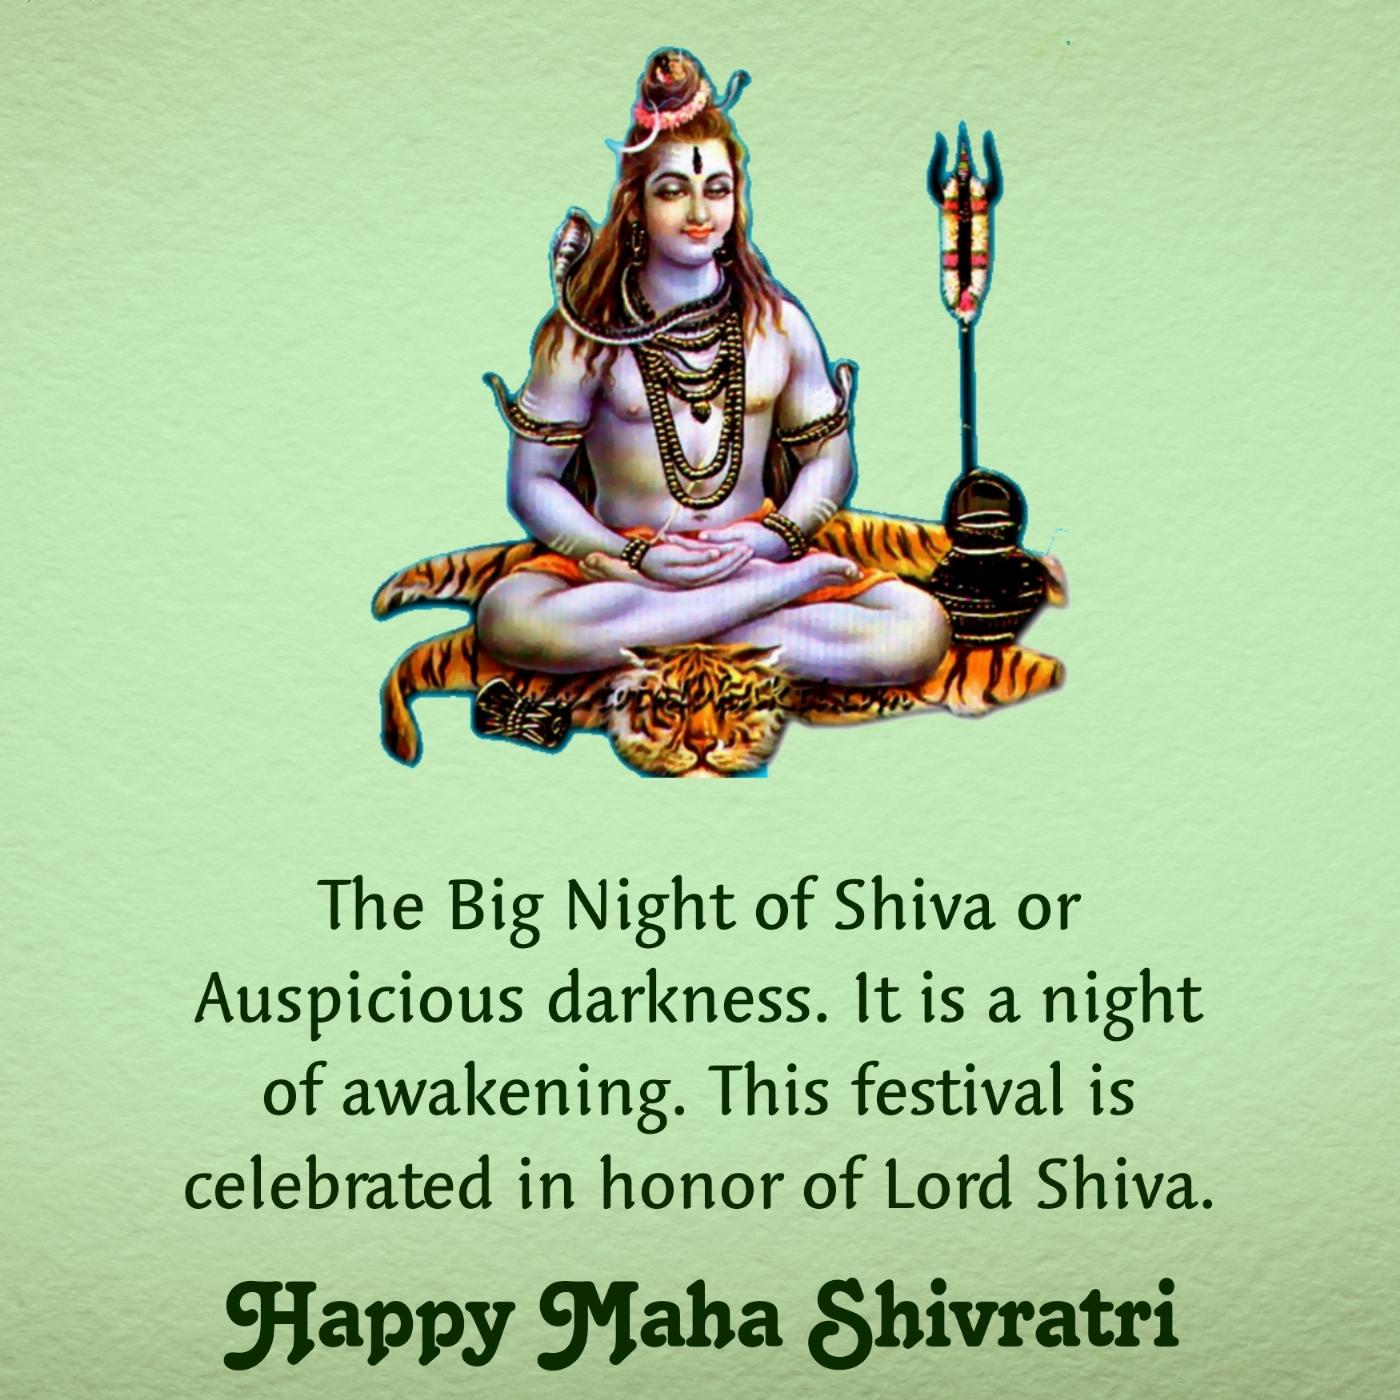 The Big Night of Shiva or Auspicious darkness It is a night of awakening